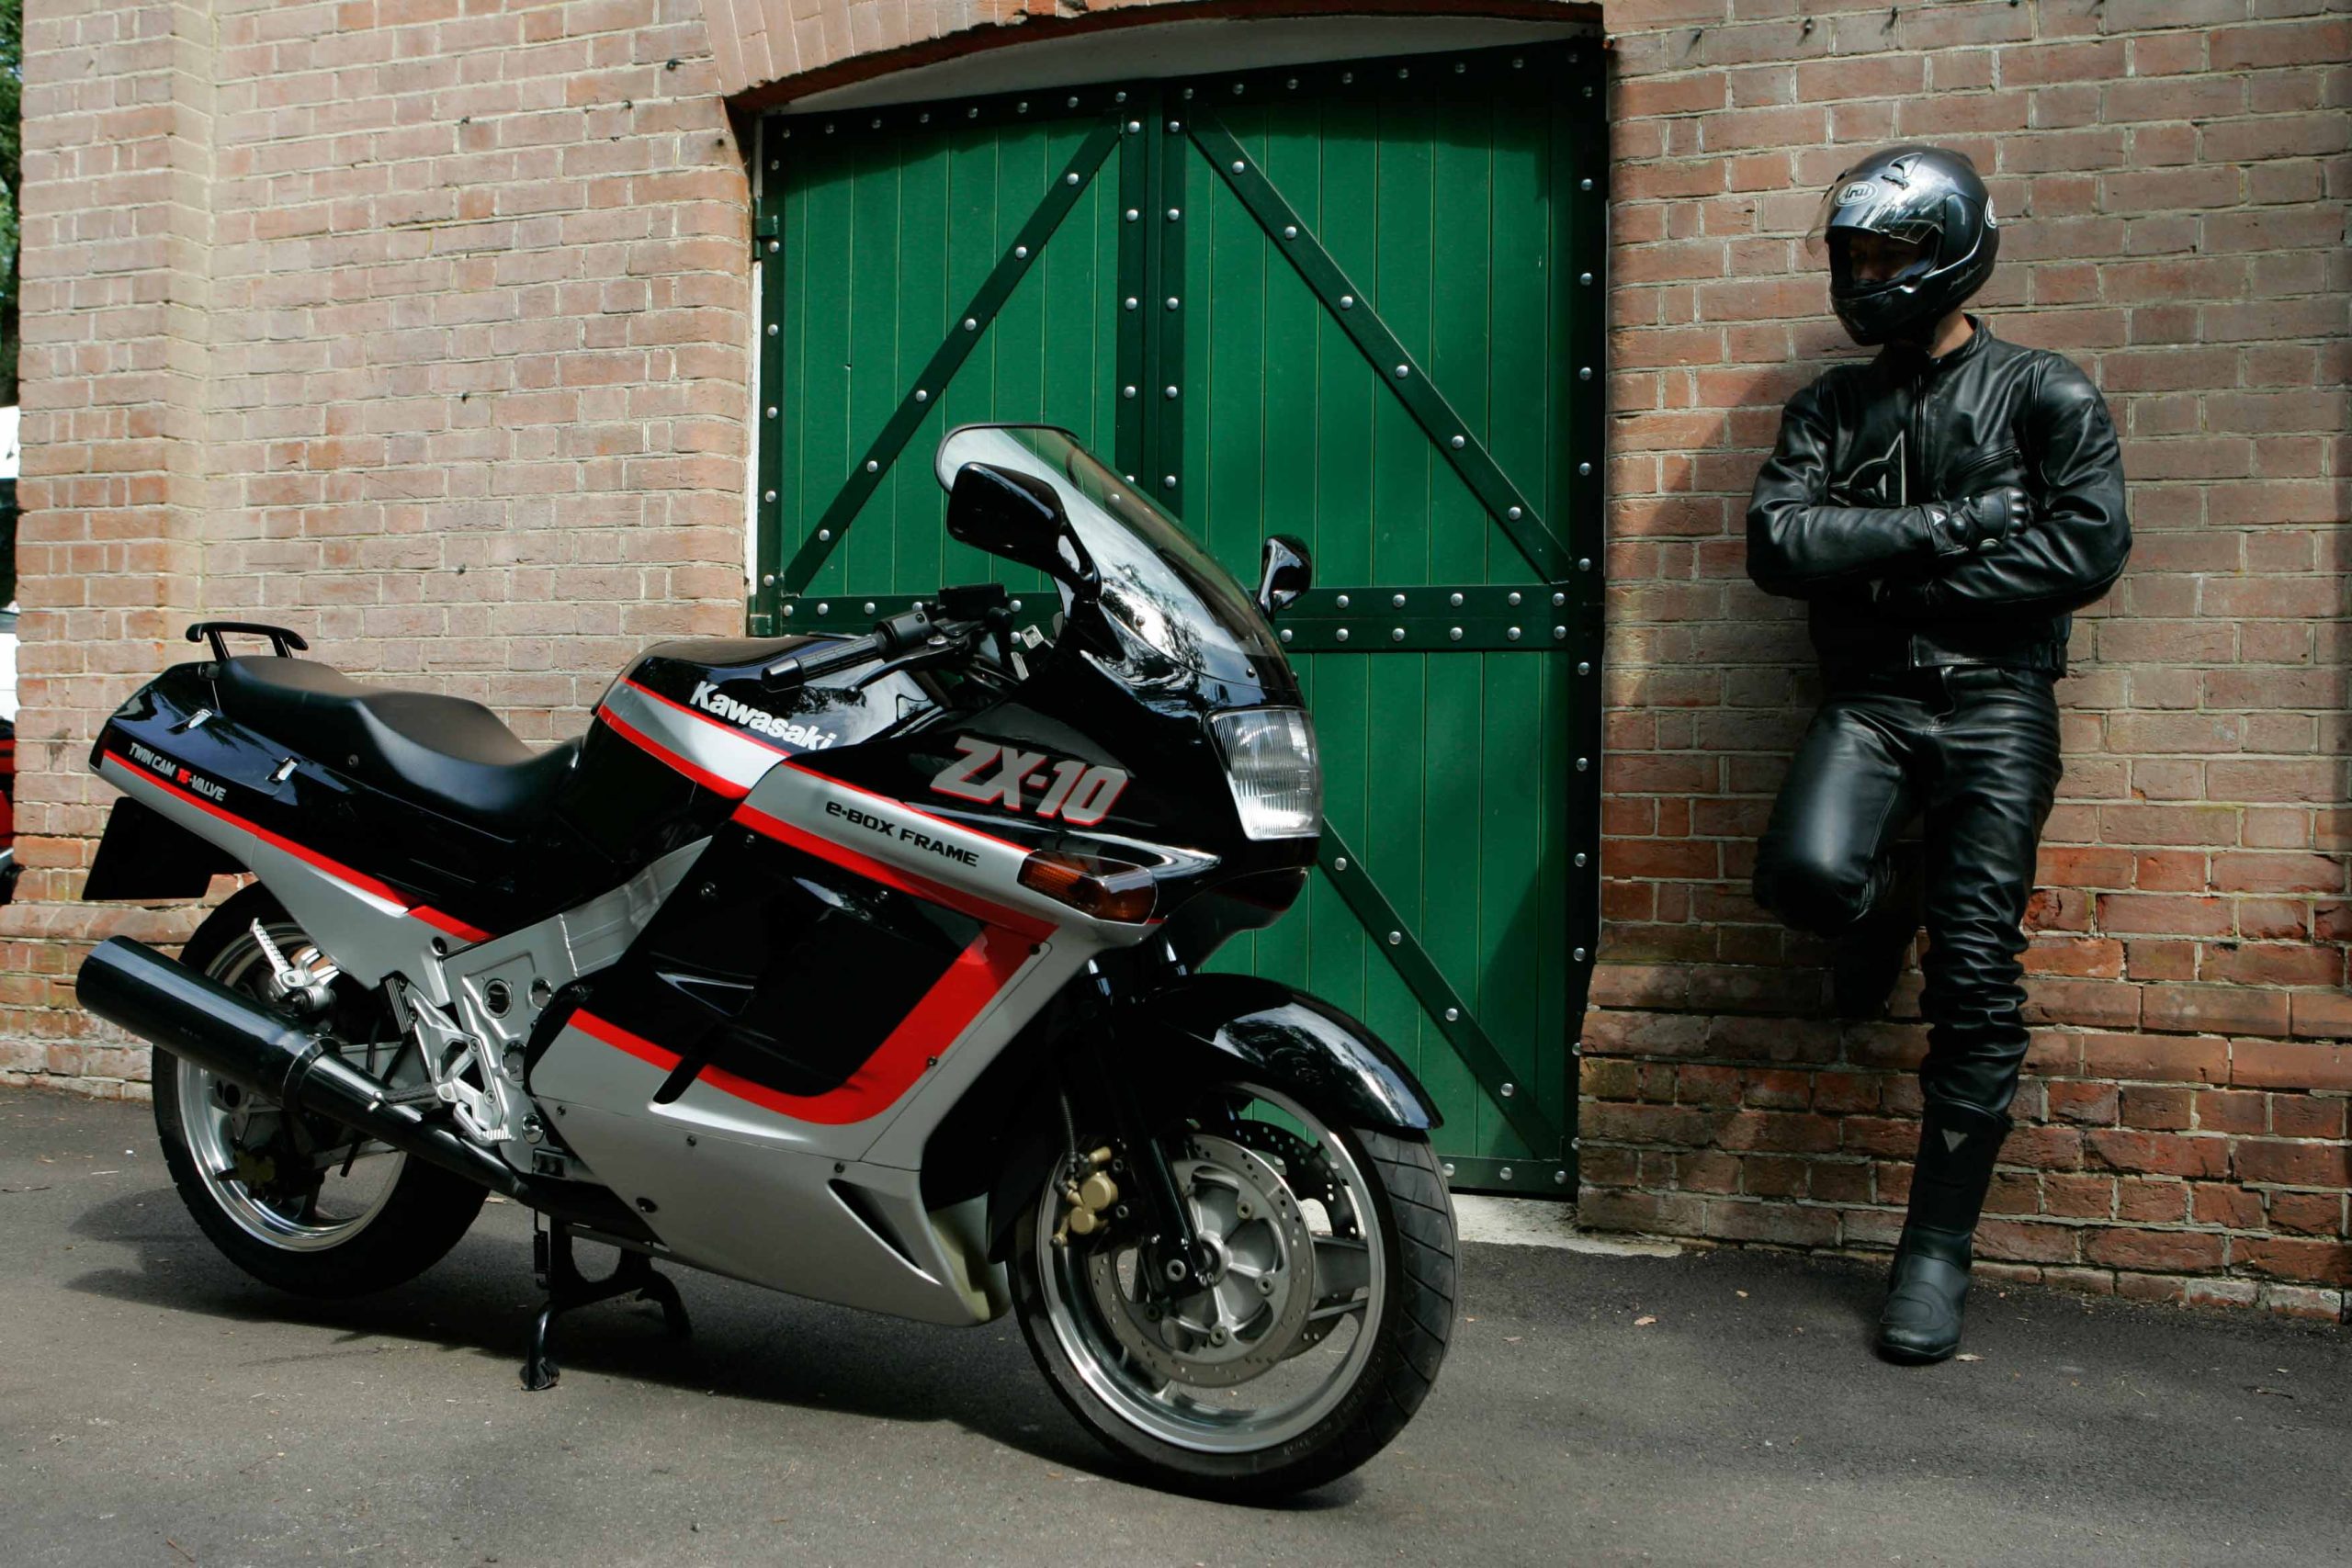 The Kawasaki ZX-10 was more sports-tourer than superbike